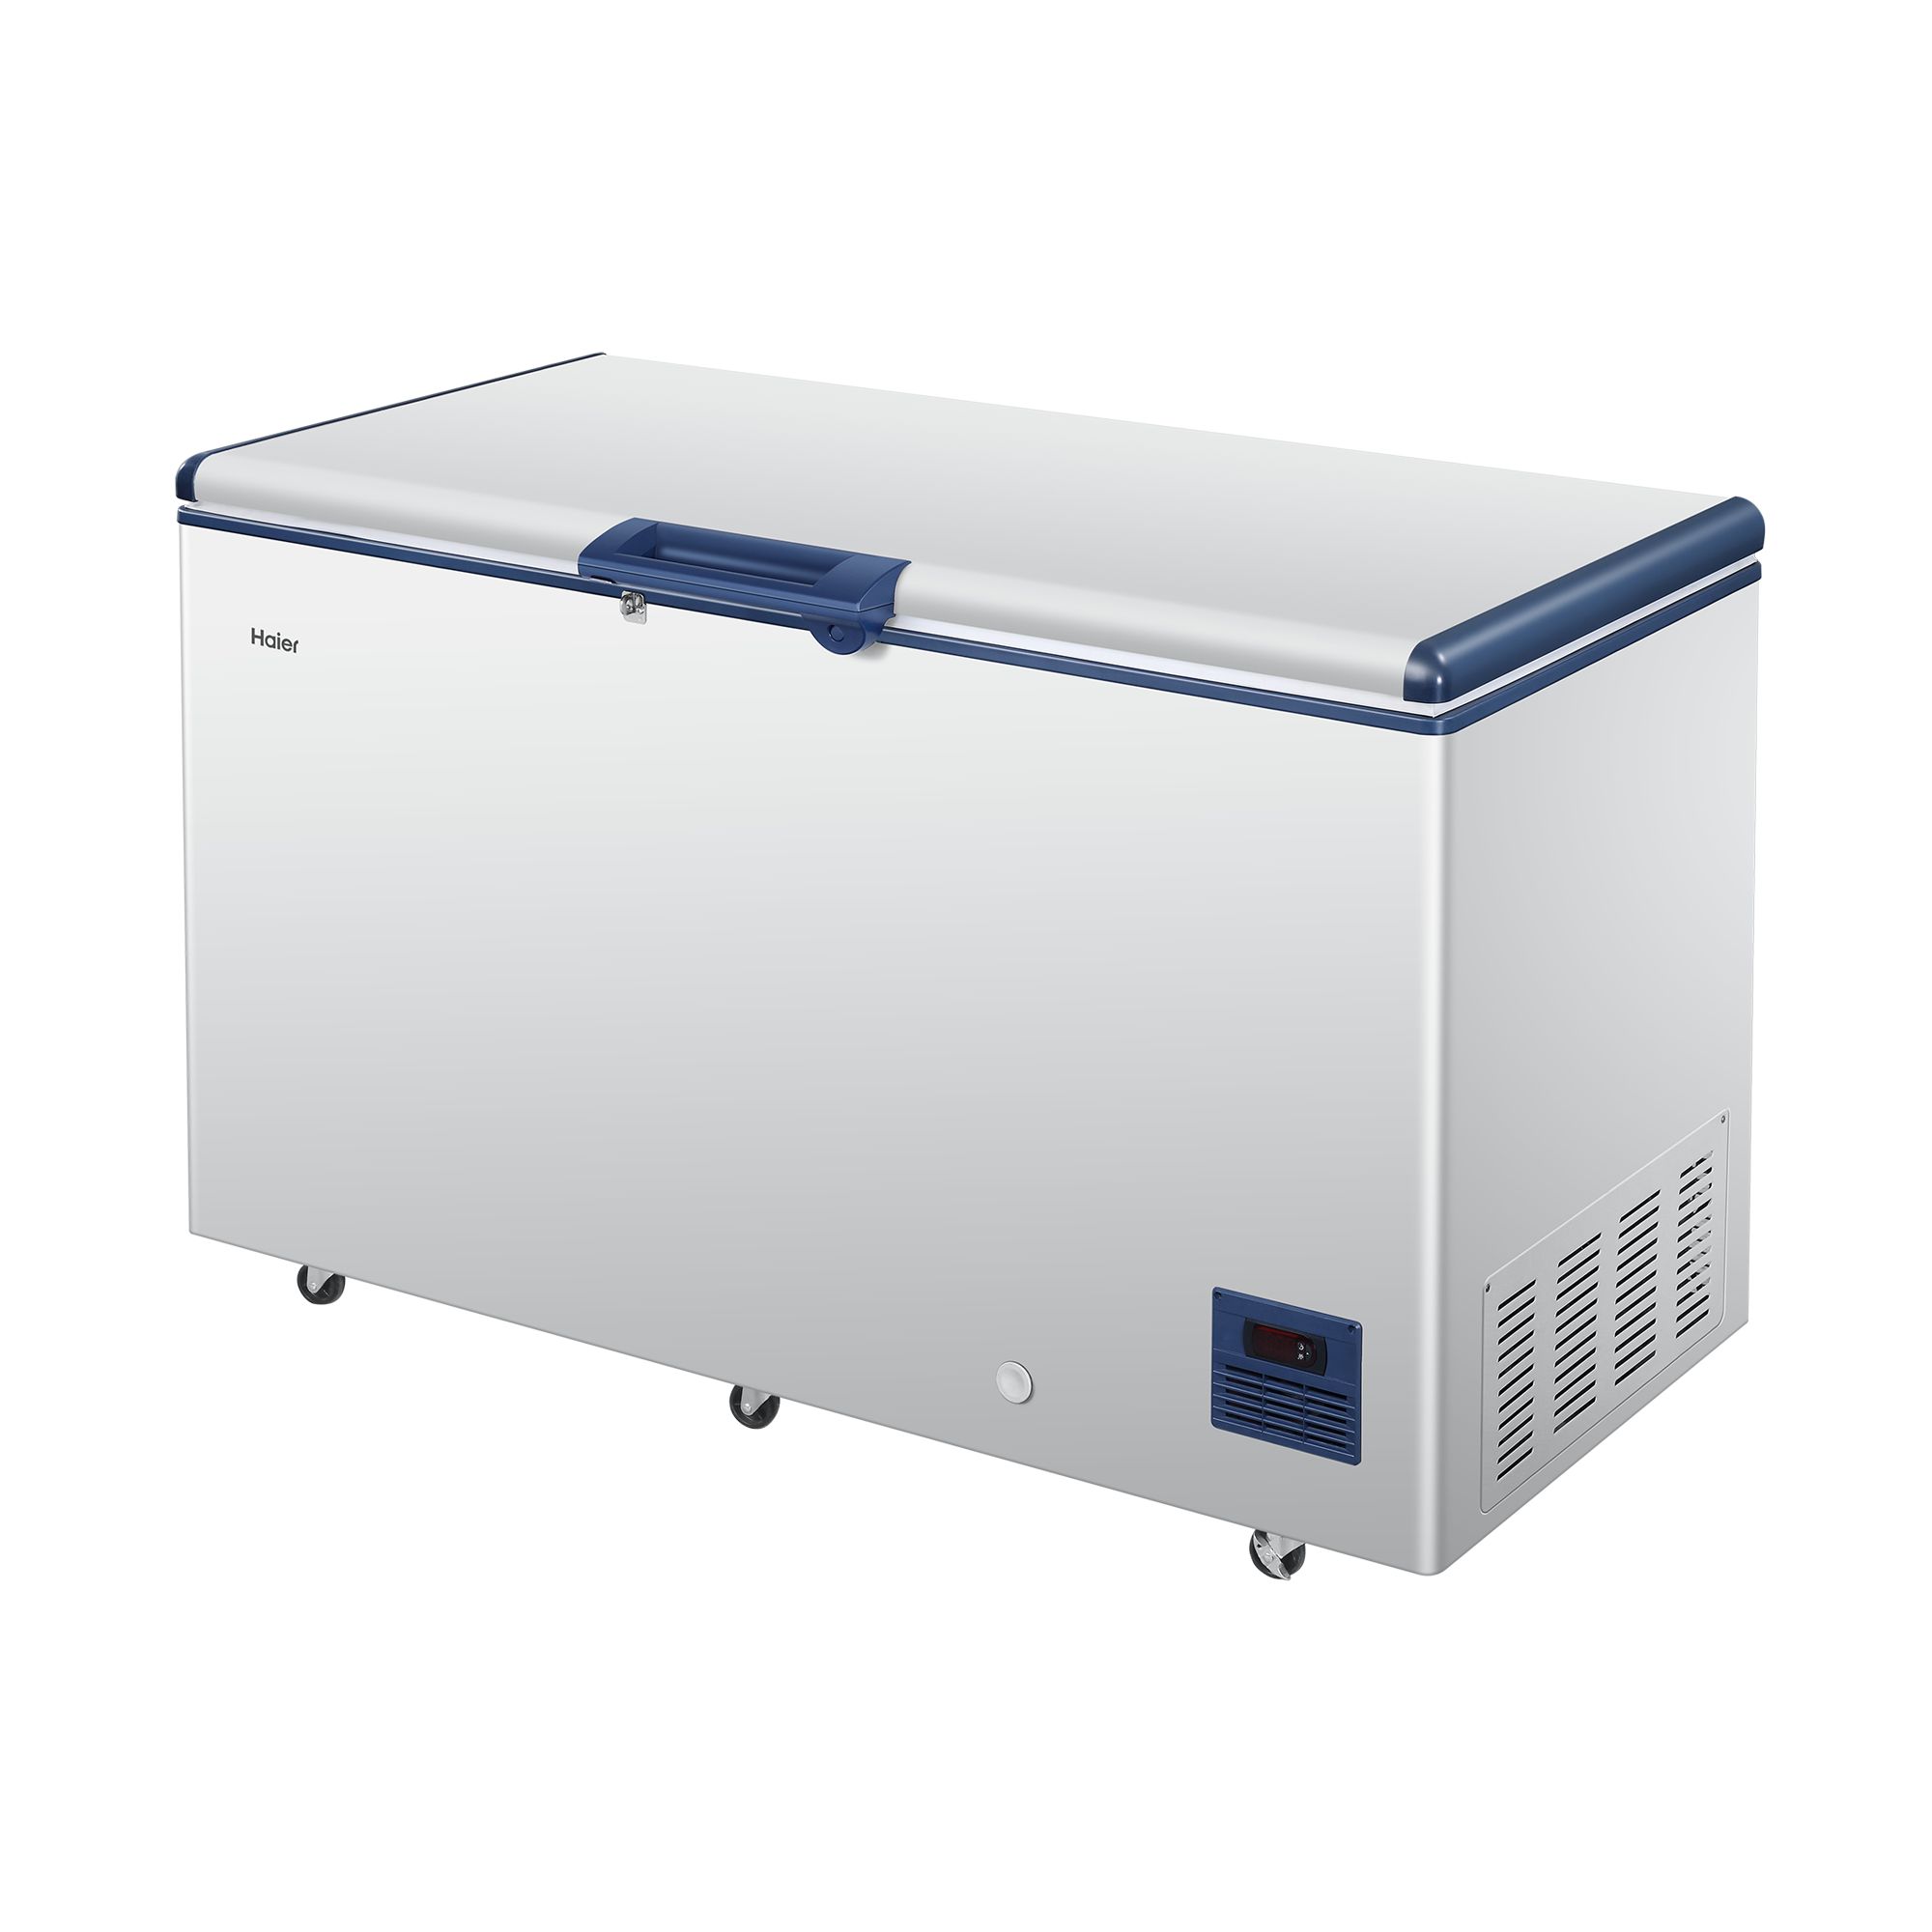 Haier/海尔 DW-60W321EU1 商用卧式冰柜 冷冻柜 -65度深冷冰柜图